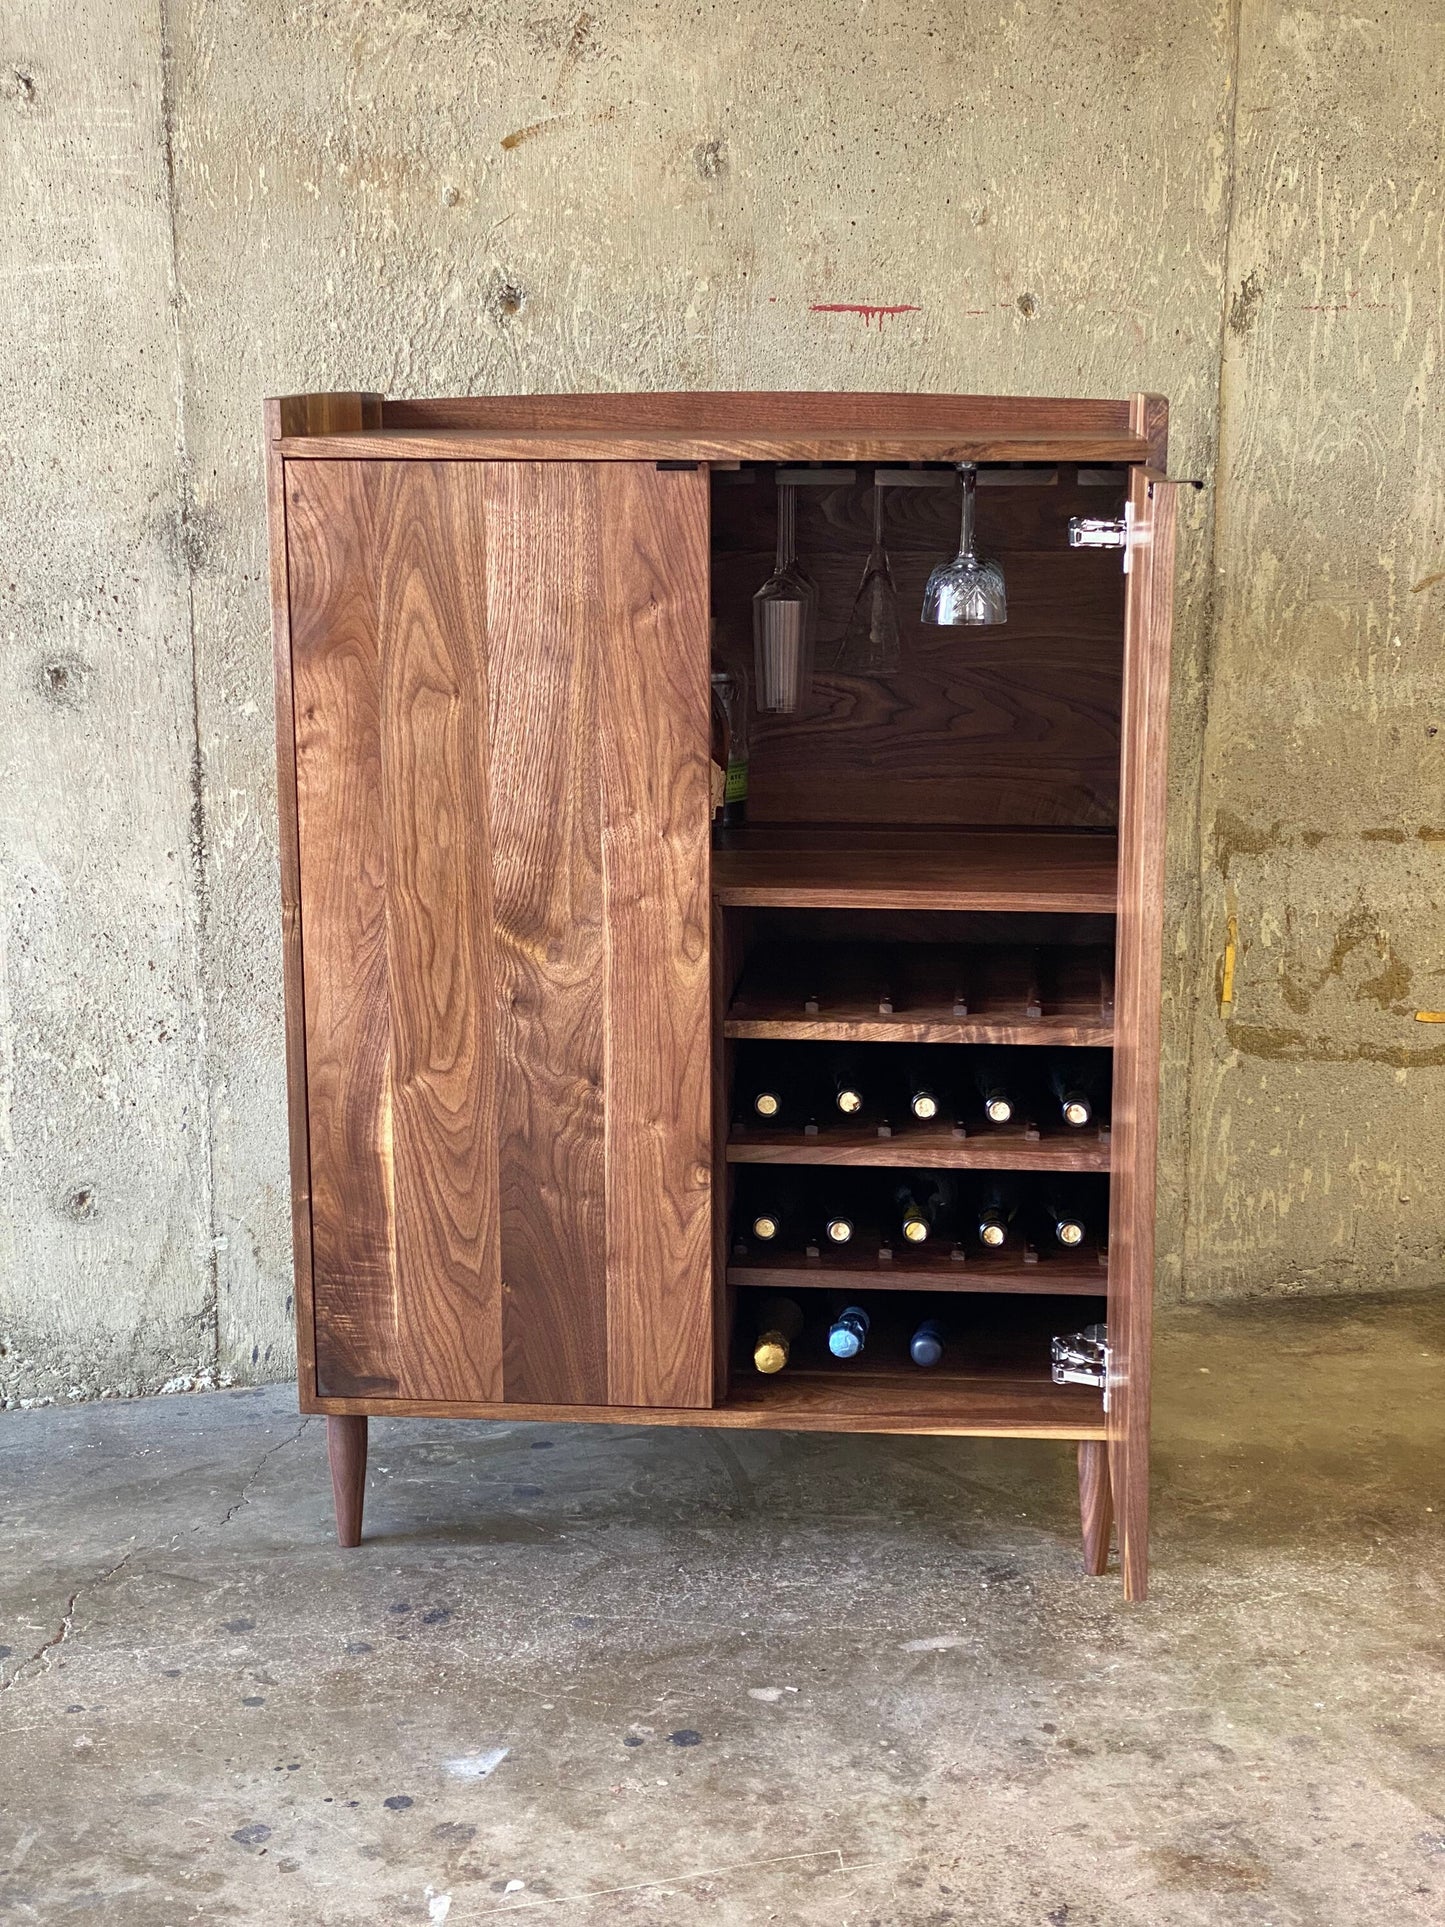 the “Tall” Shenandoah Liquor & Wine Cabinet